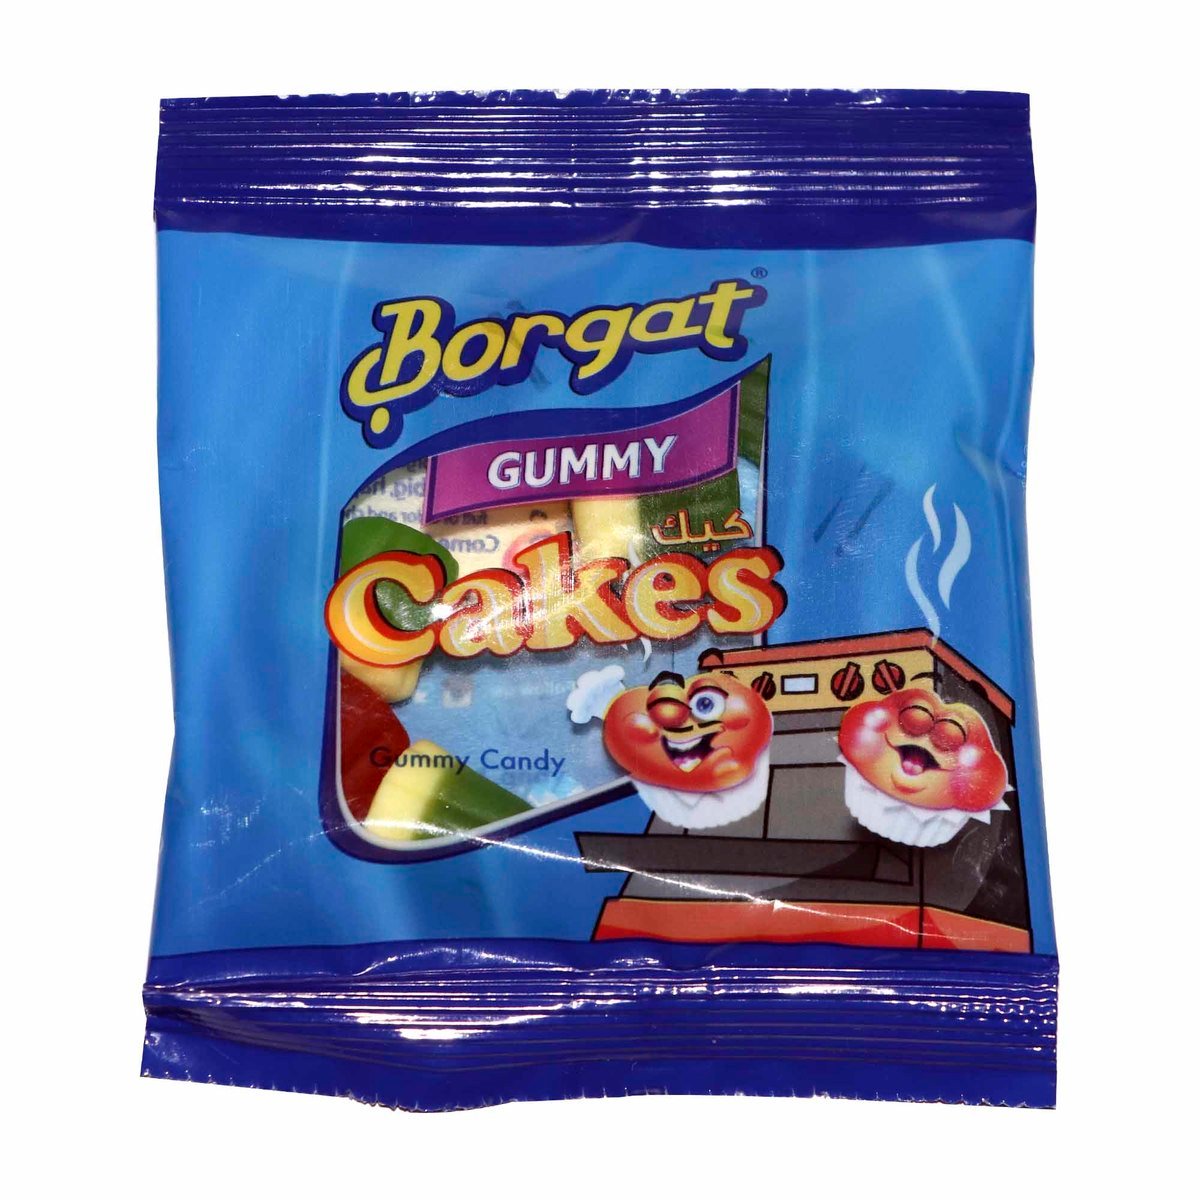 Borgat Cakes Gummy Candy 10 g